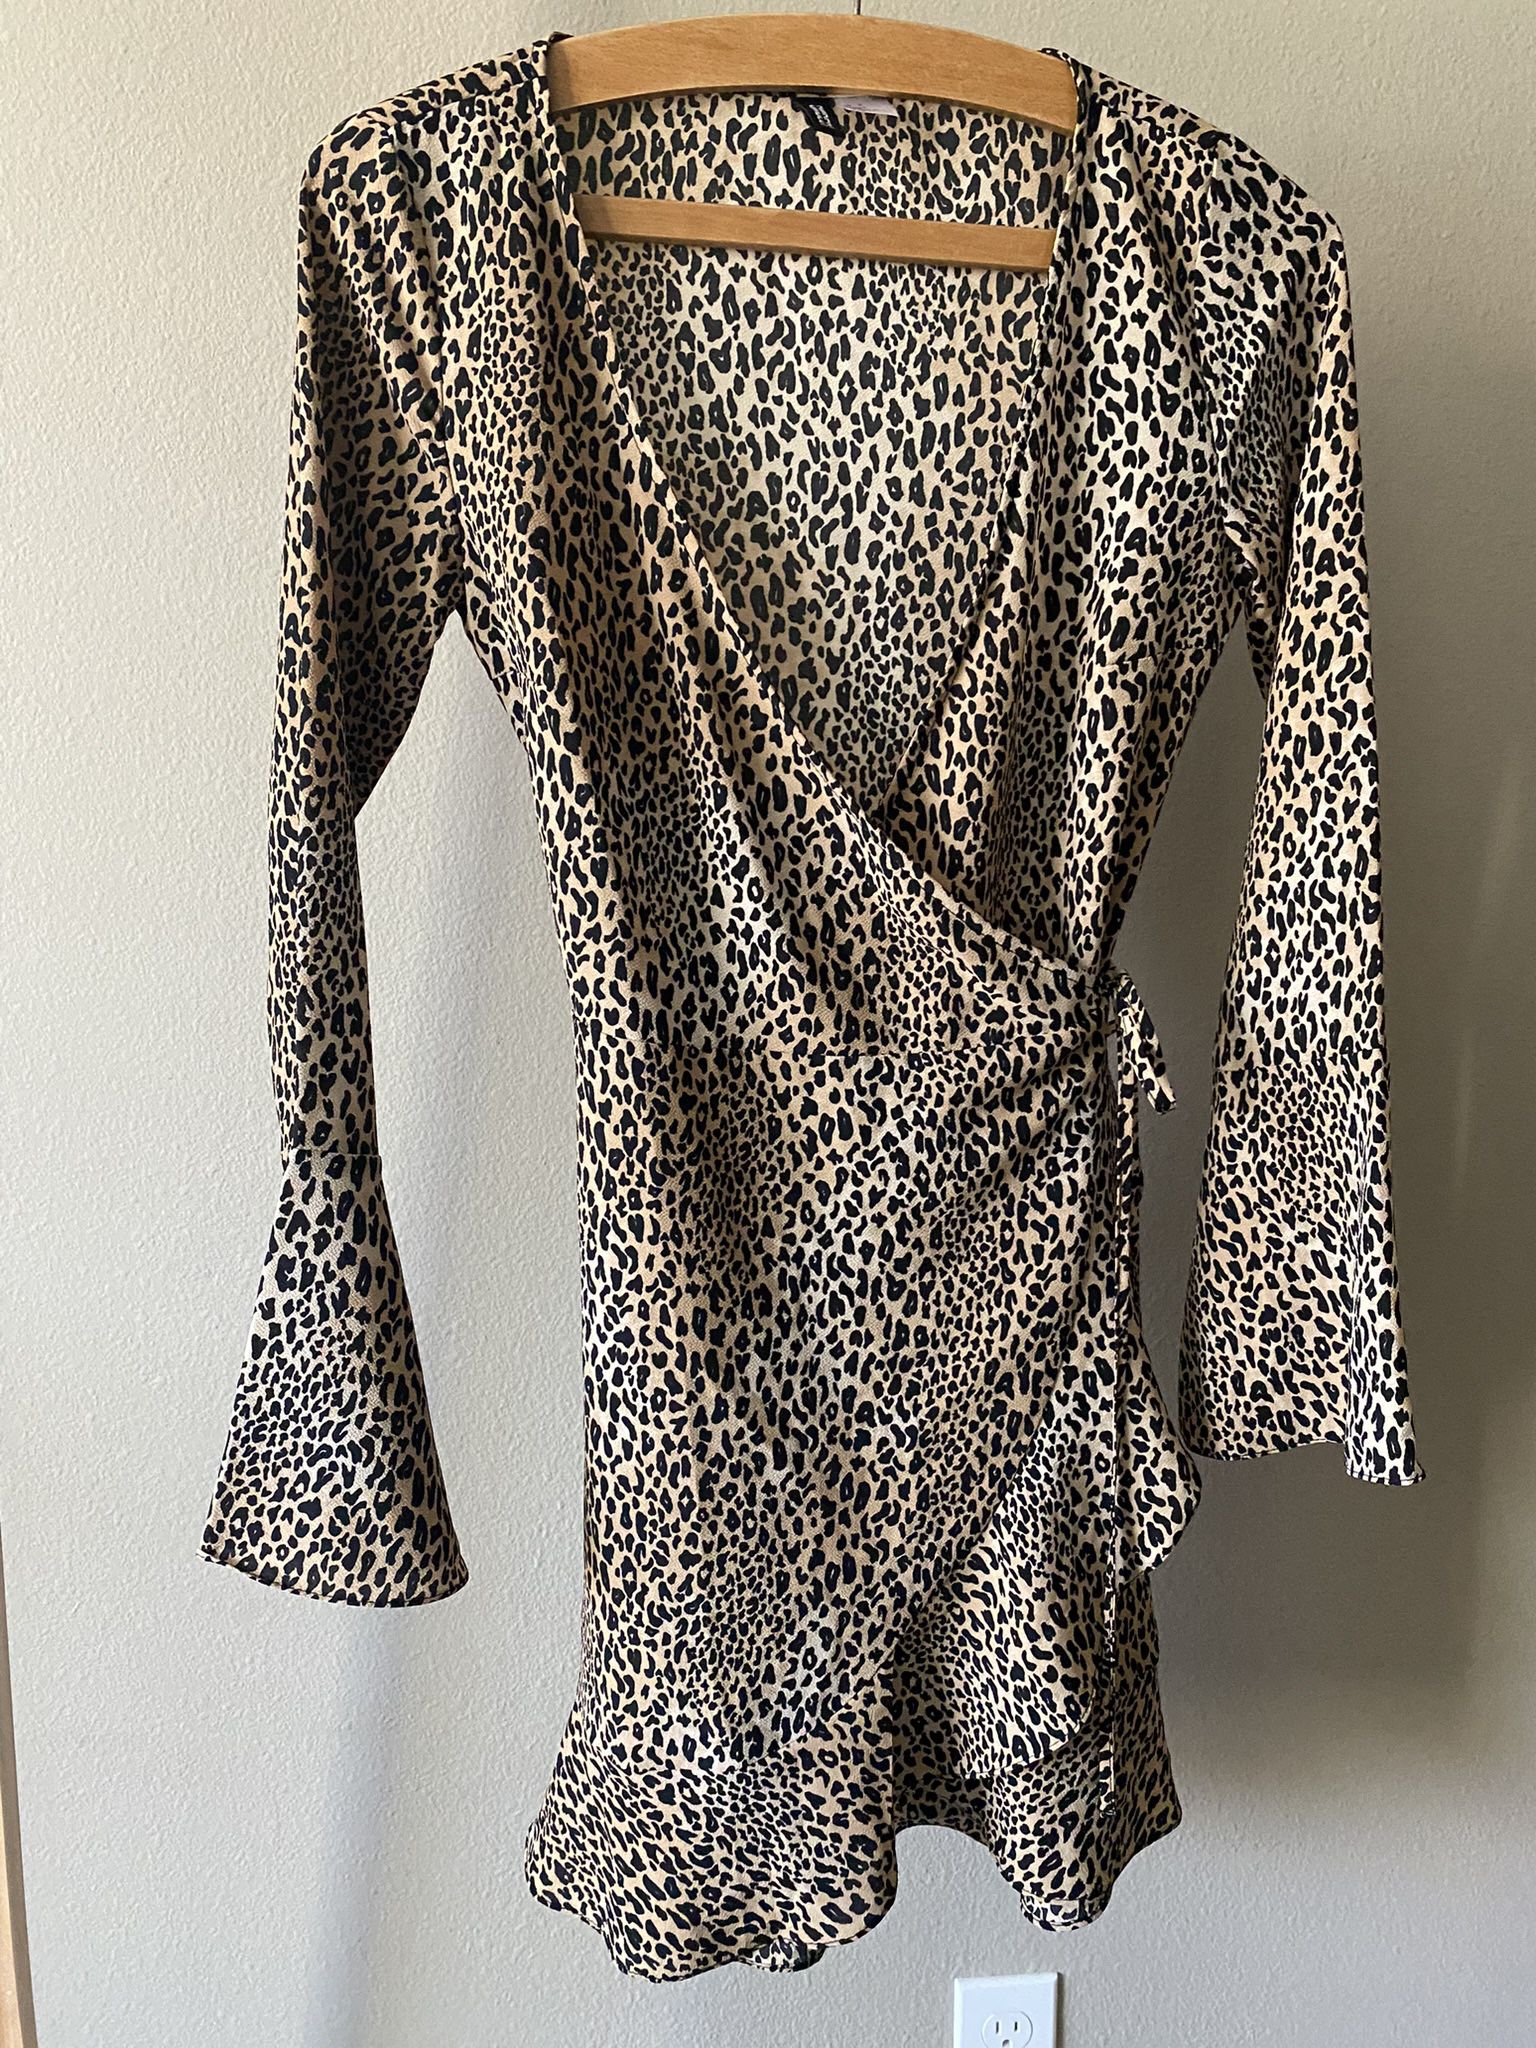 Leopard Wrap-Around Cocktail Dress  by H&M - NEW